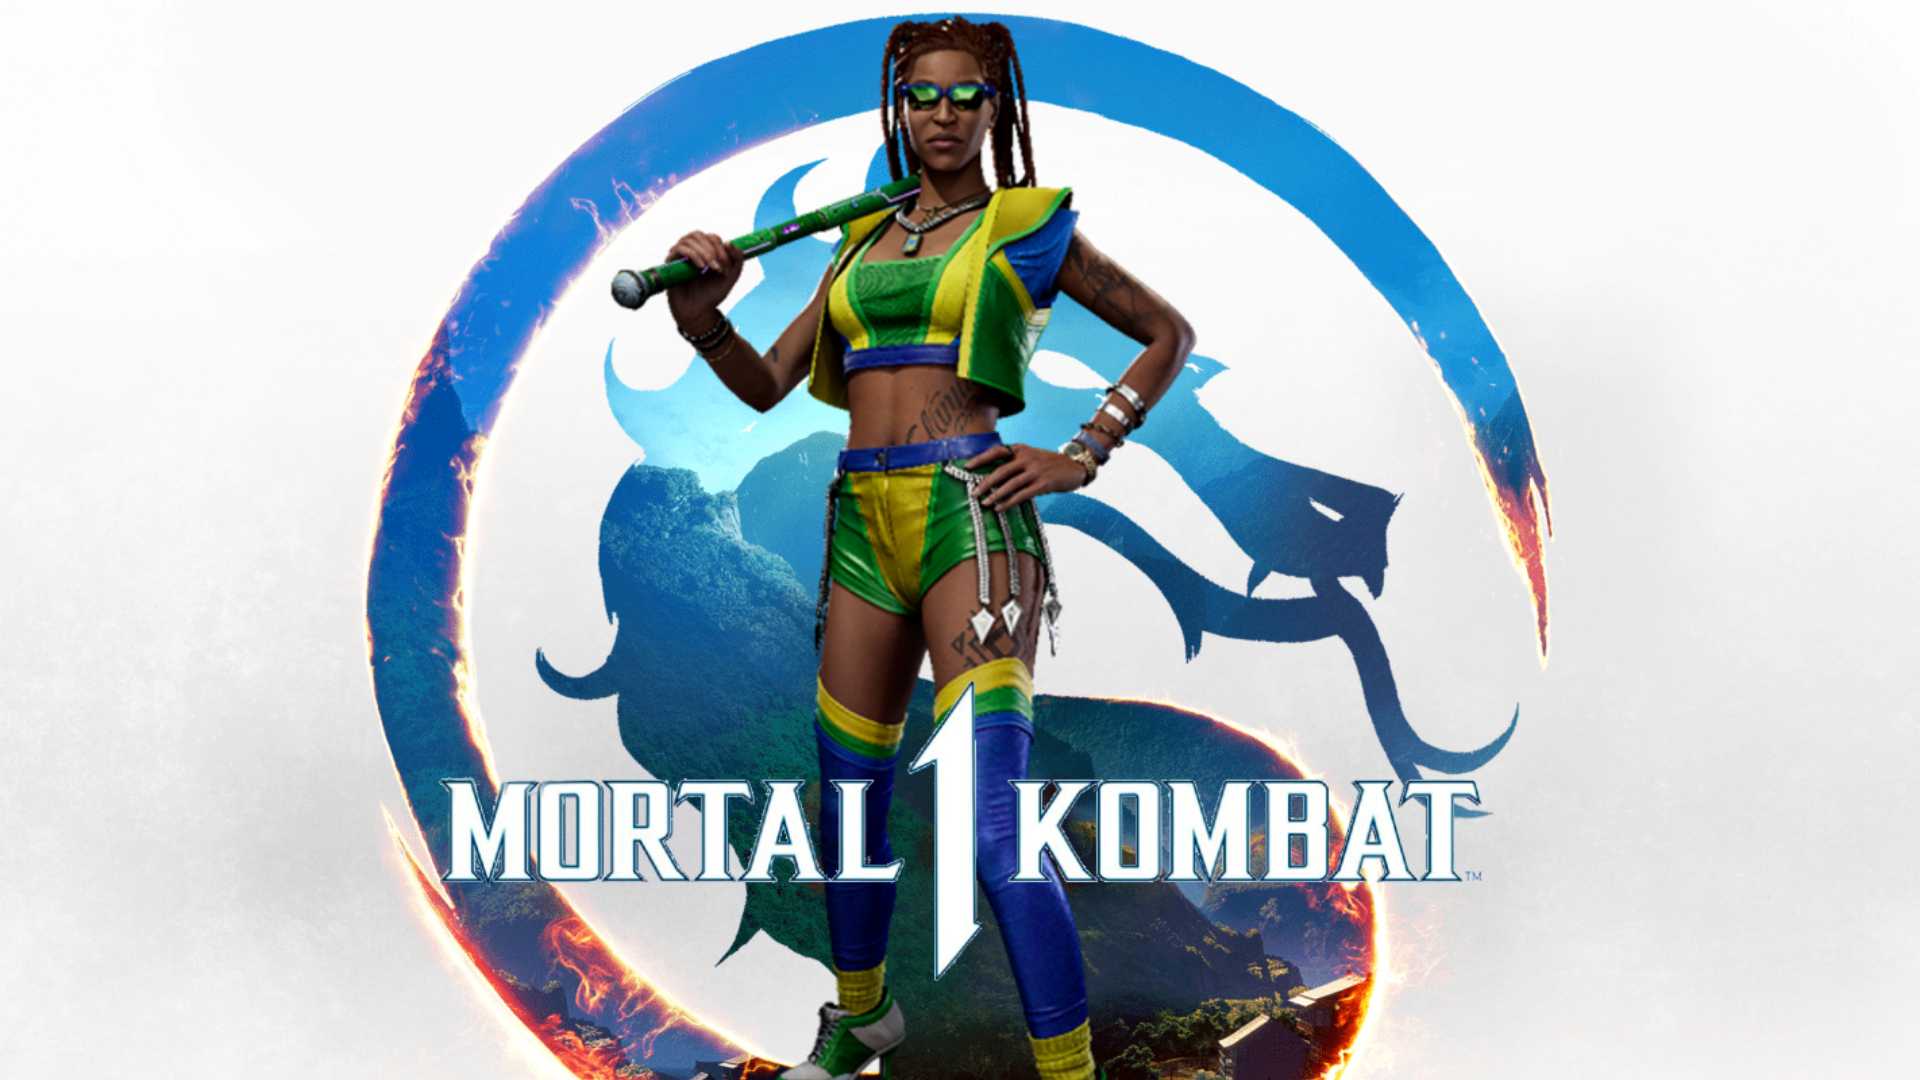 Mortal Kombat 1 terá skin 'funkeira' de Tanya exclusiva para o Brasil